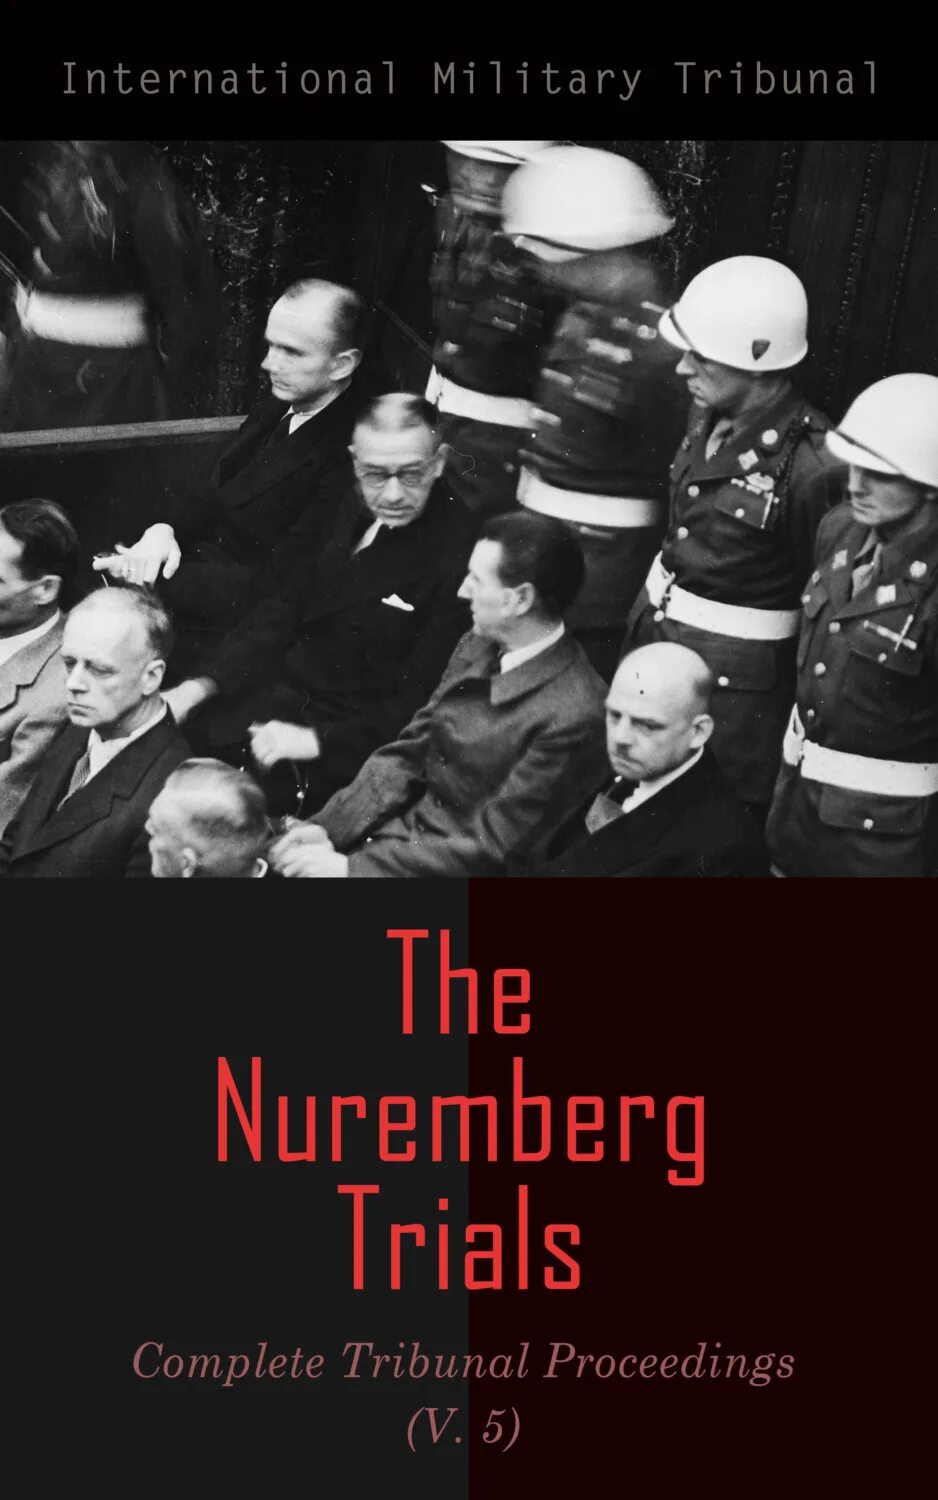 Автор интернационала. Nuremberg Trials. Джон Вудз Нюрнбергский процесс. The Nuremberg Trials Chronicle.